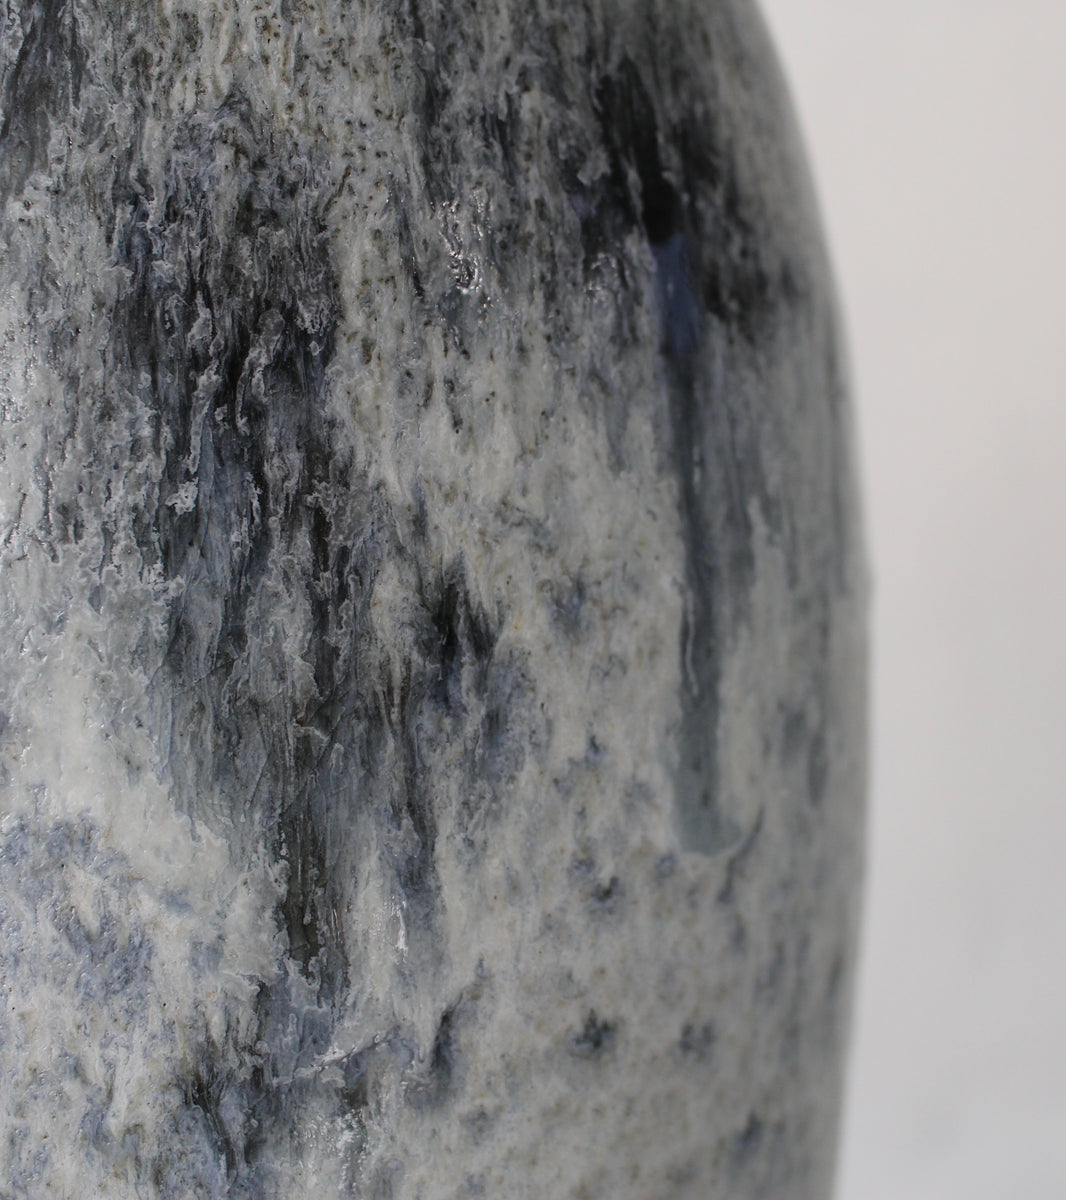 Tall Ovoid Vase <br> Deep Blue Glaze